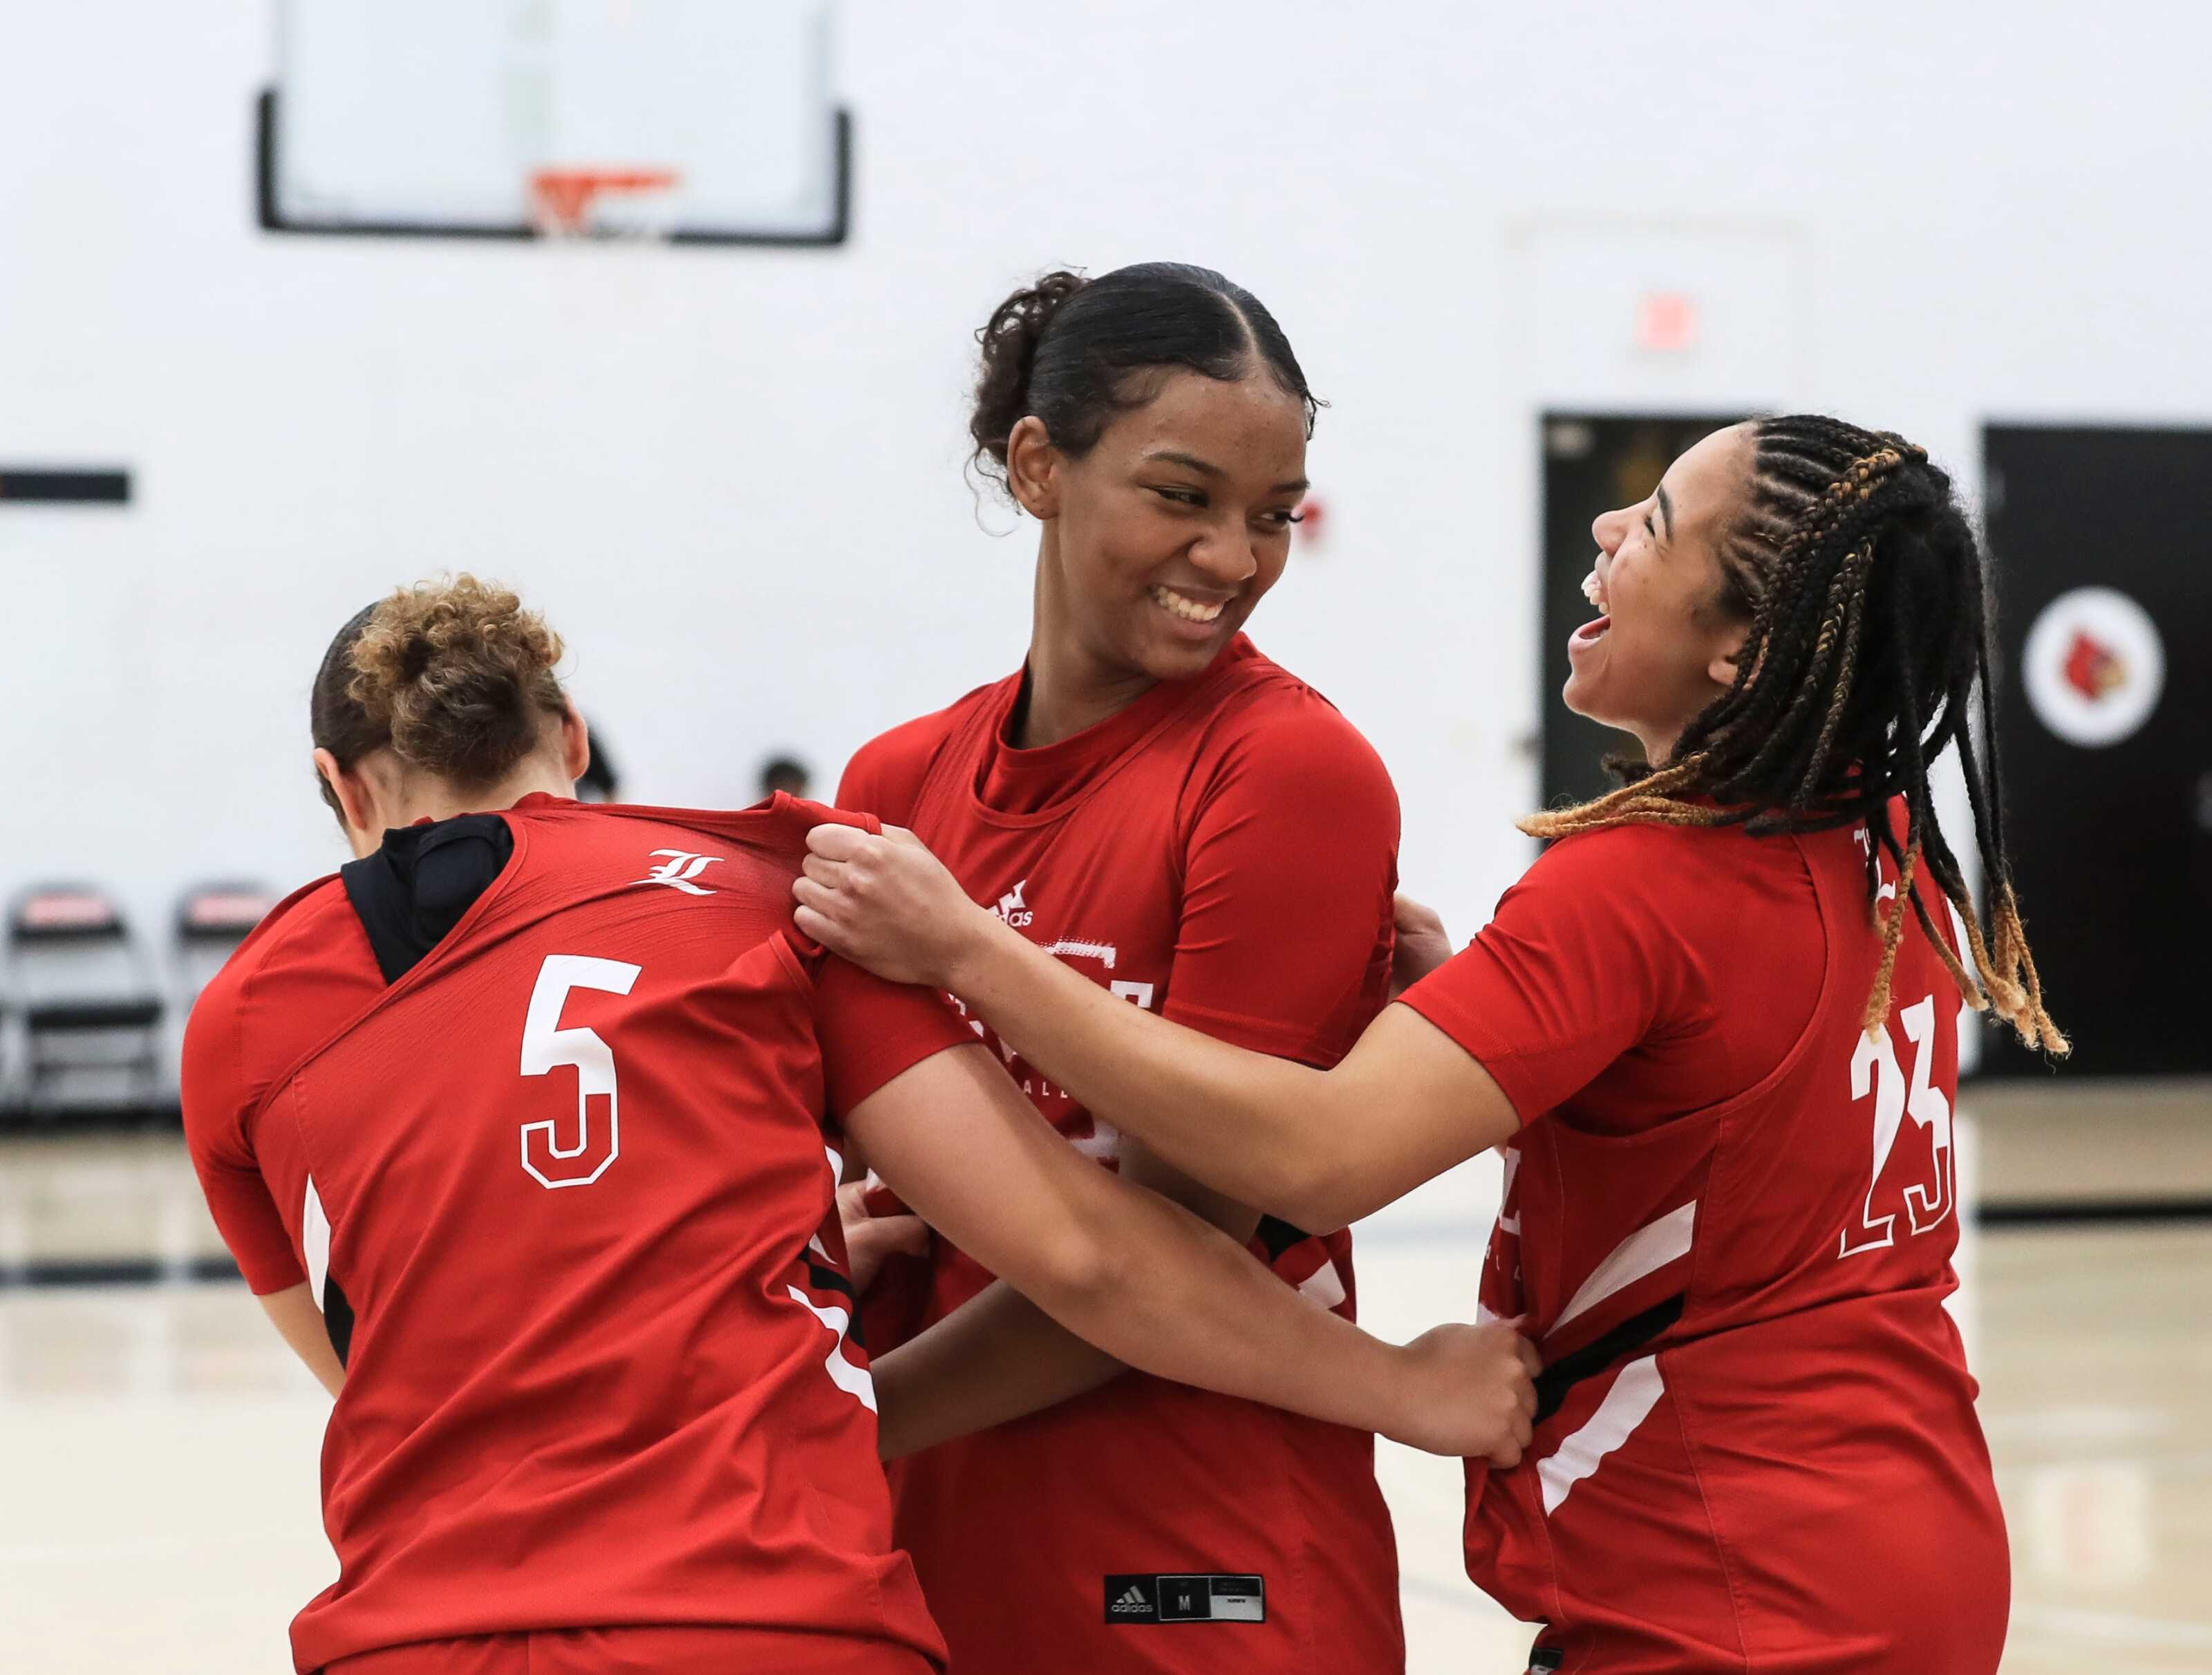 Louisville Cardinals adidas Practice Jersey - Basketball Women's